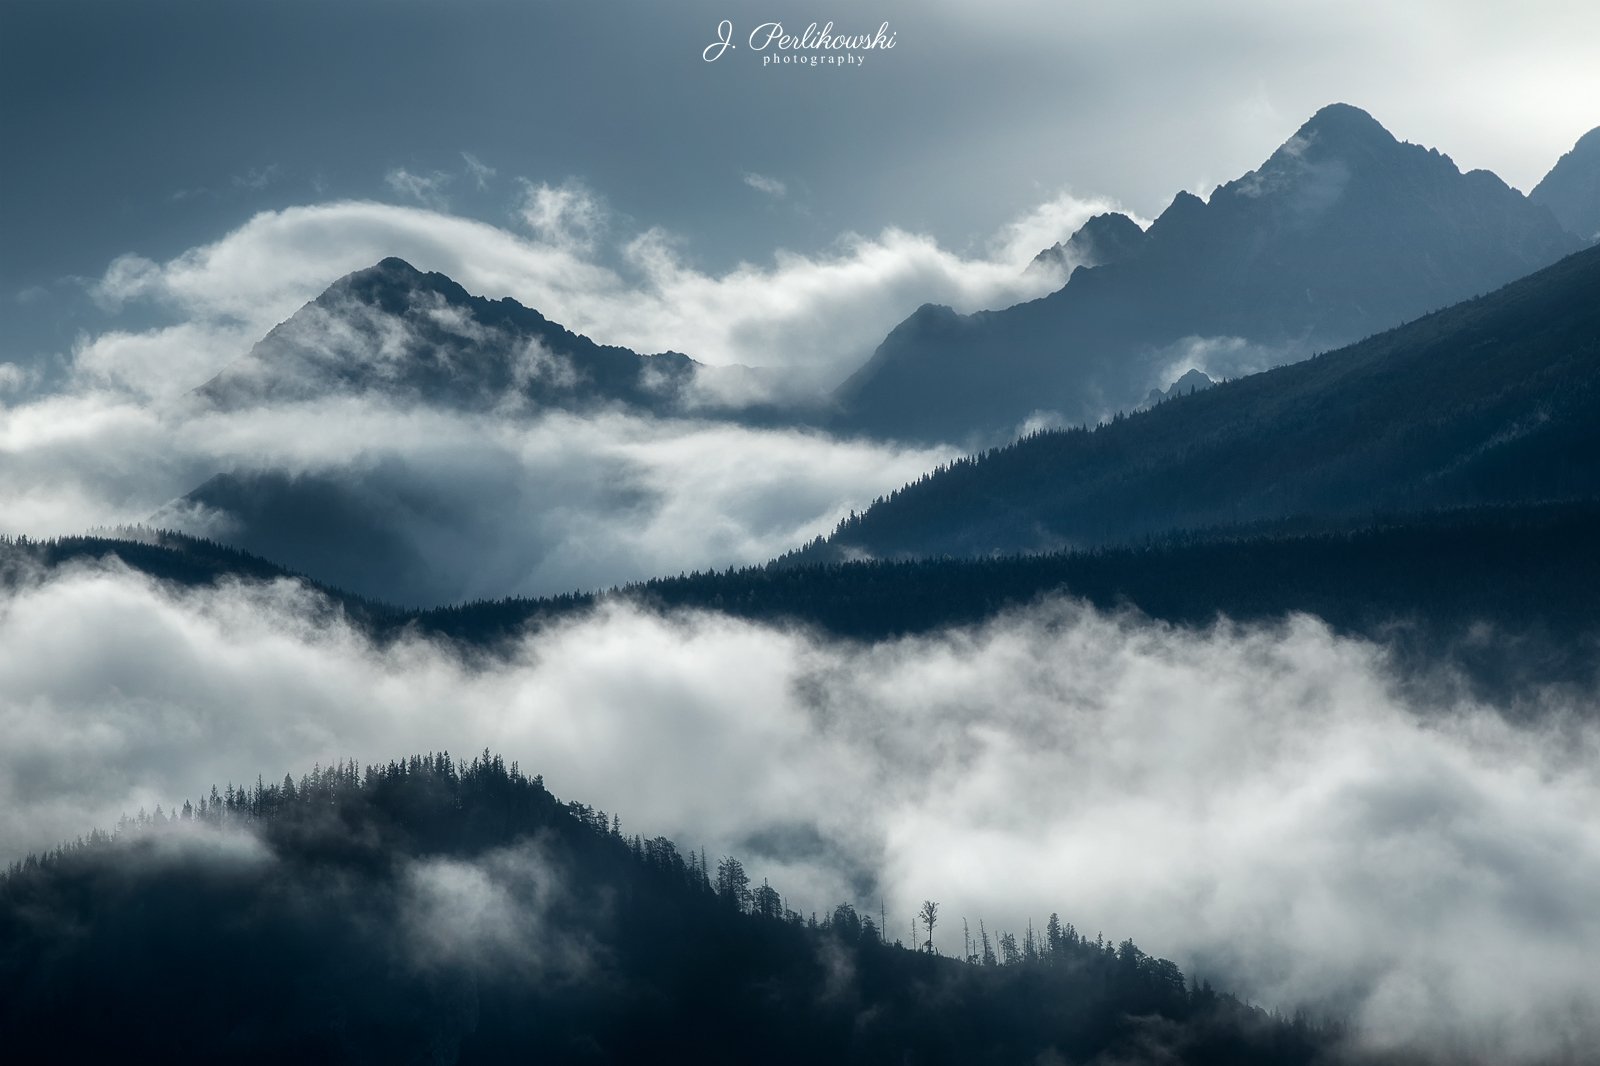 tatra mountains,tatras, mountains, mountain, fog, mist, clouds, moody, sunrise, layers, contrast, lights,, Jakub Perlikowski